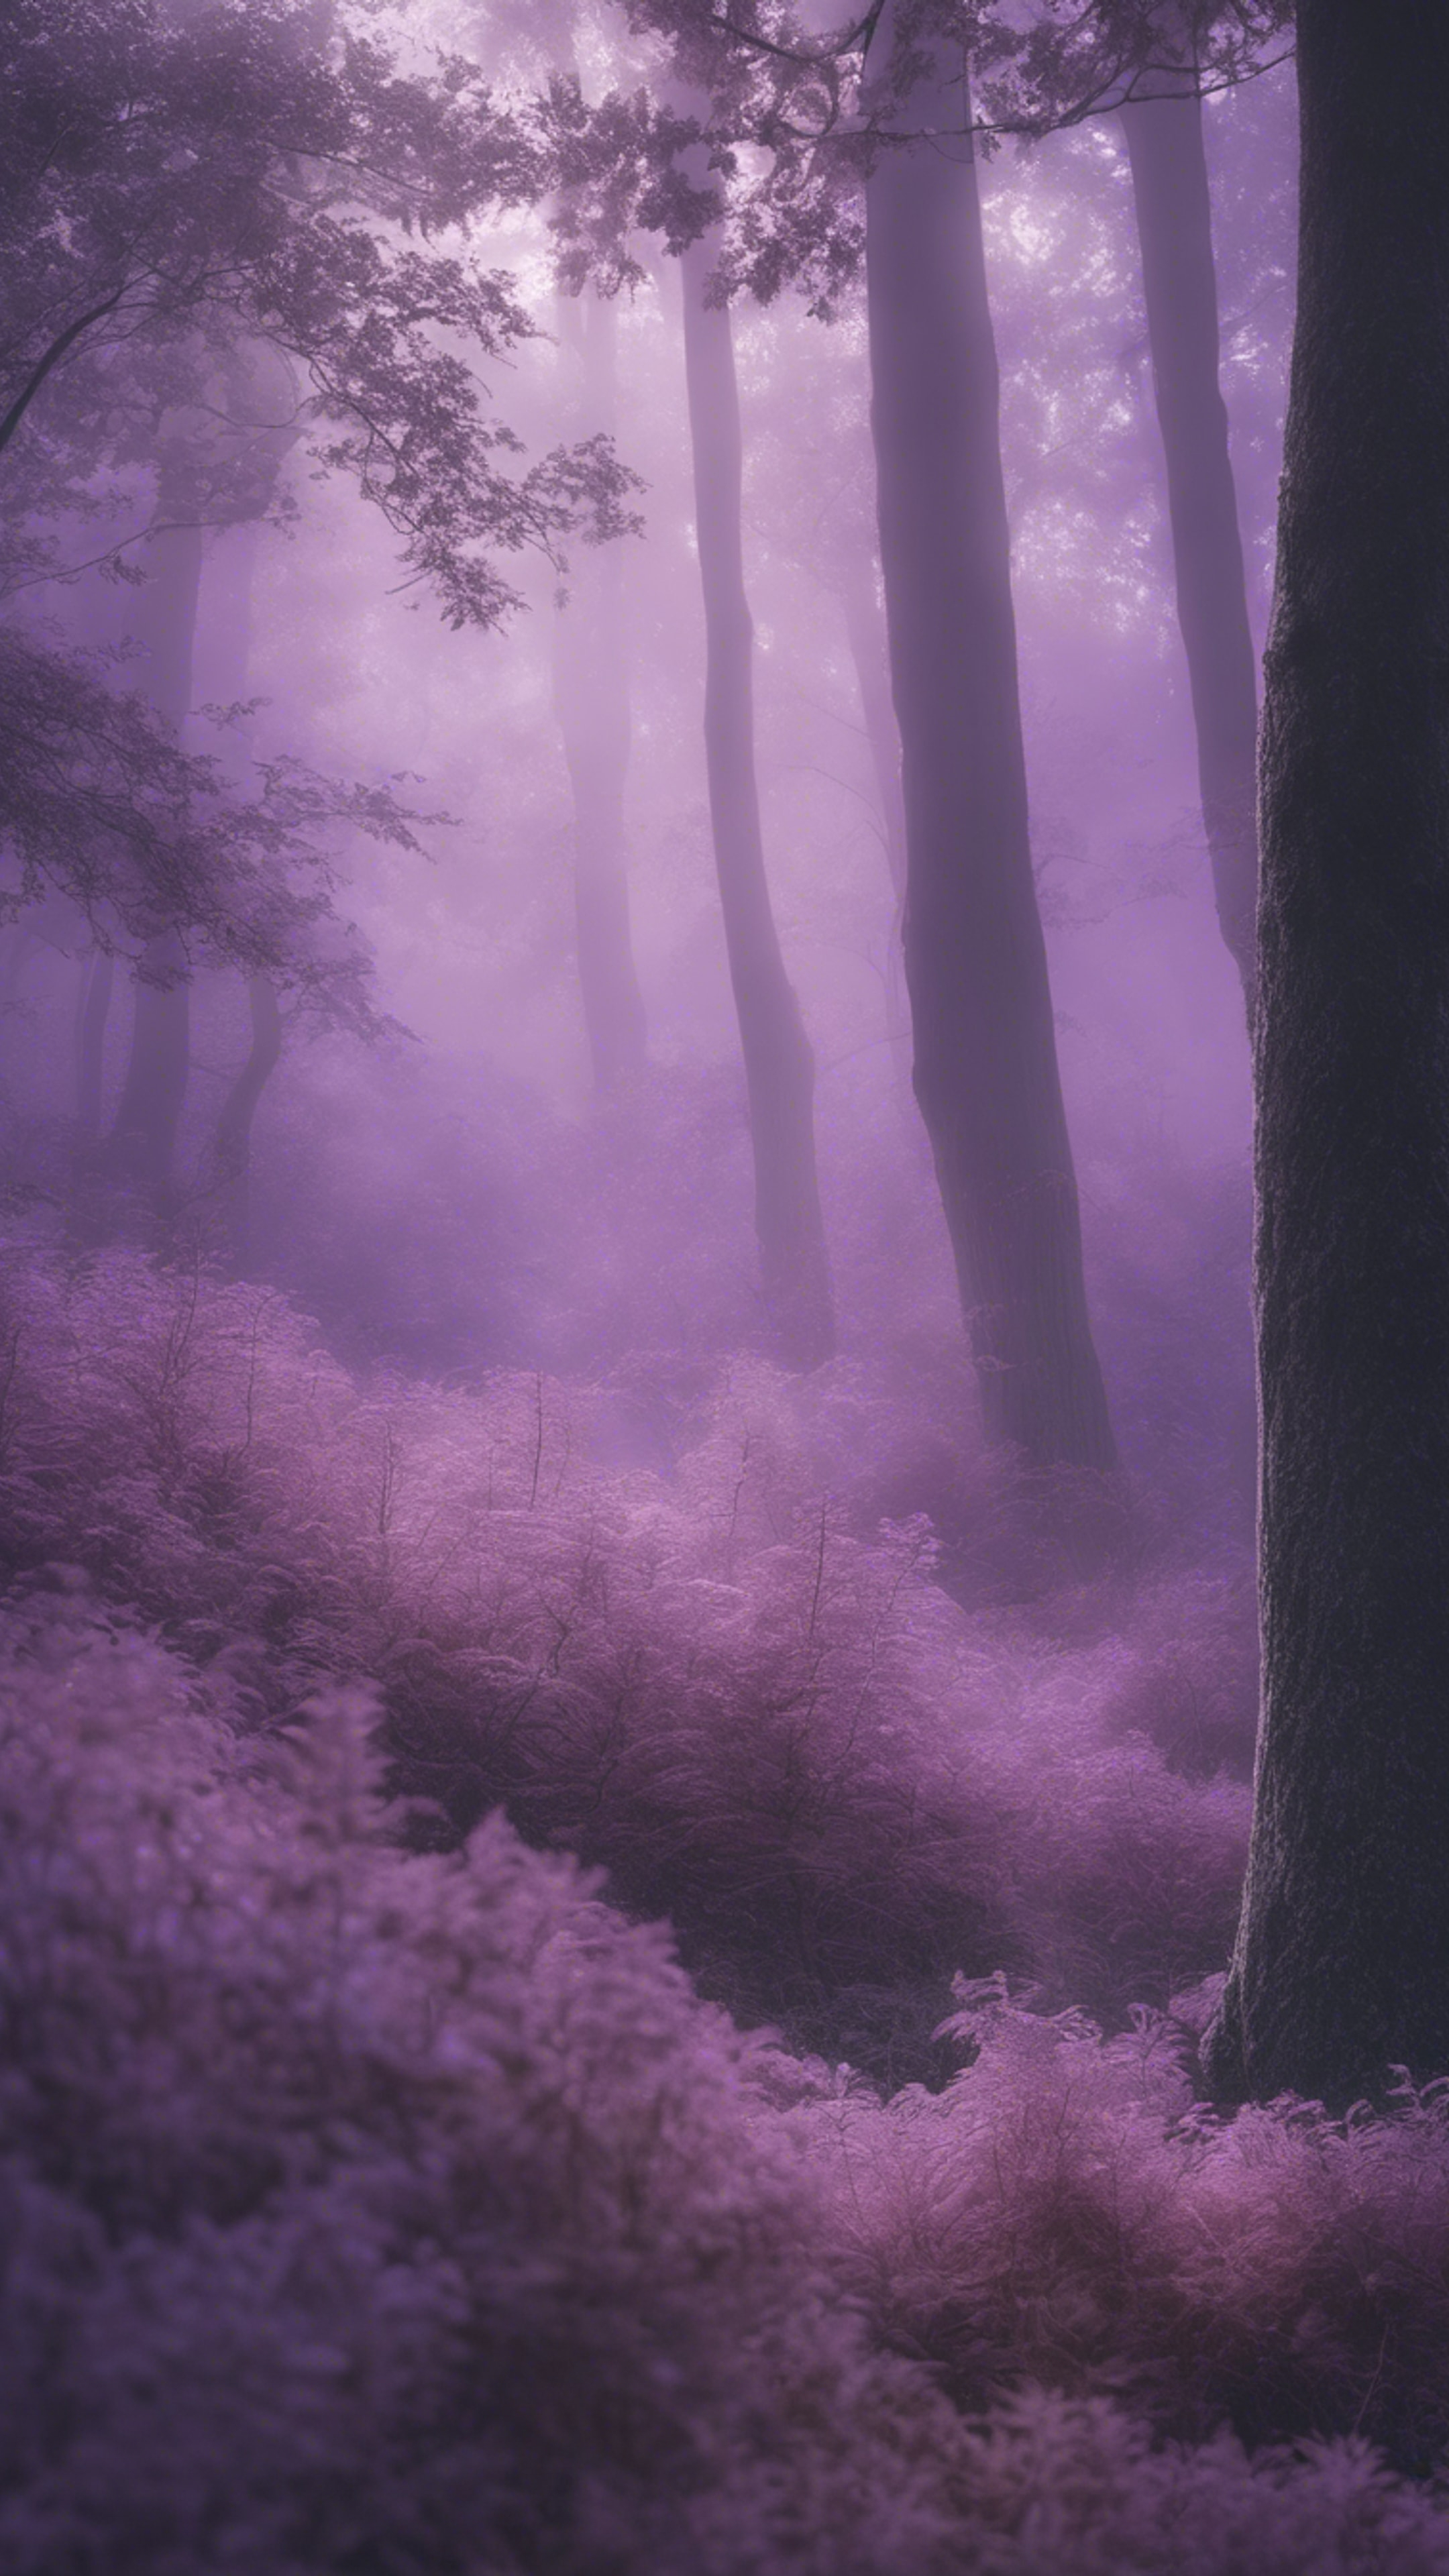 Ethereal scene of a tranquil forest bowed under a silky layer of light purple fog. Divar kağızı[581b7126aa2a4d368dd8]